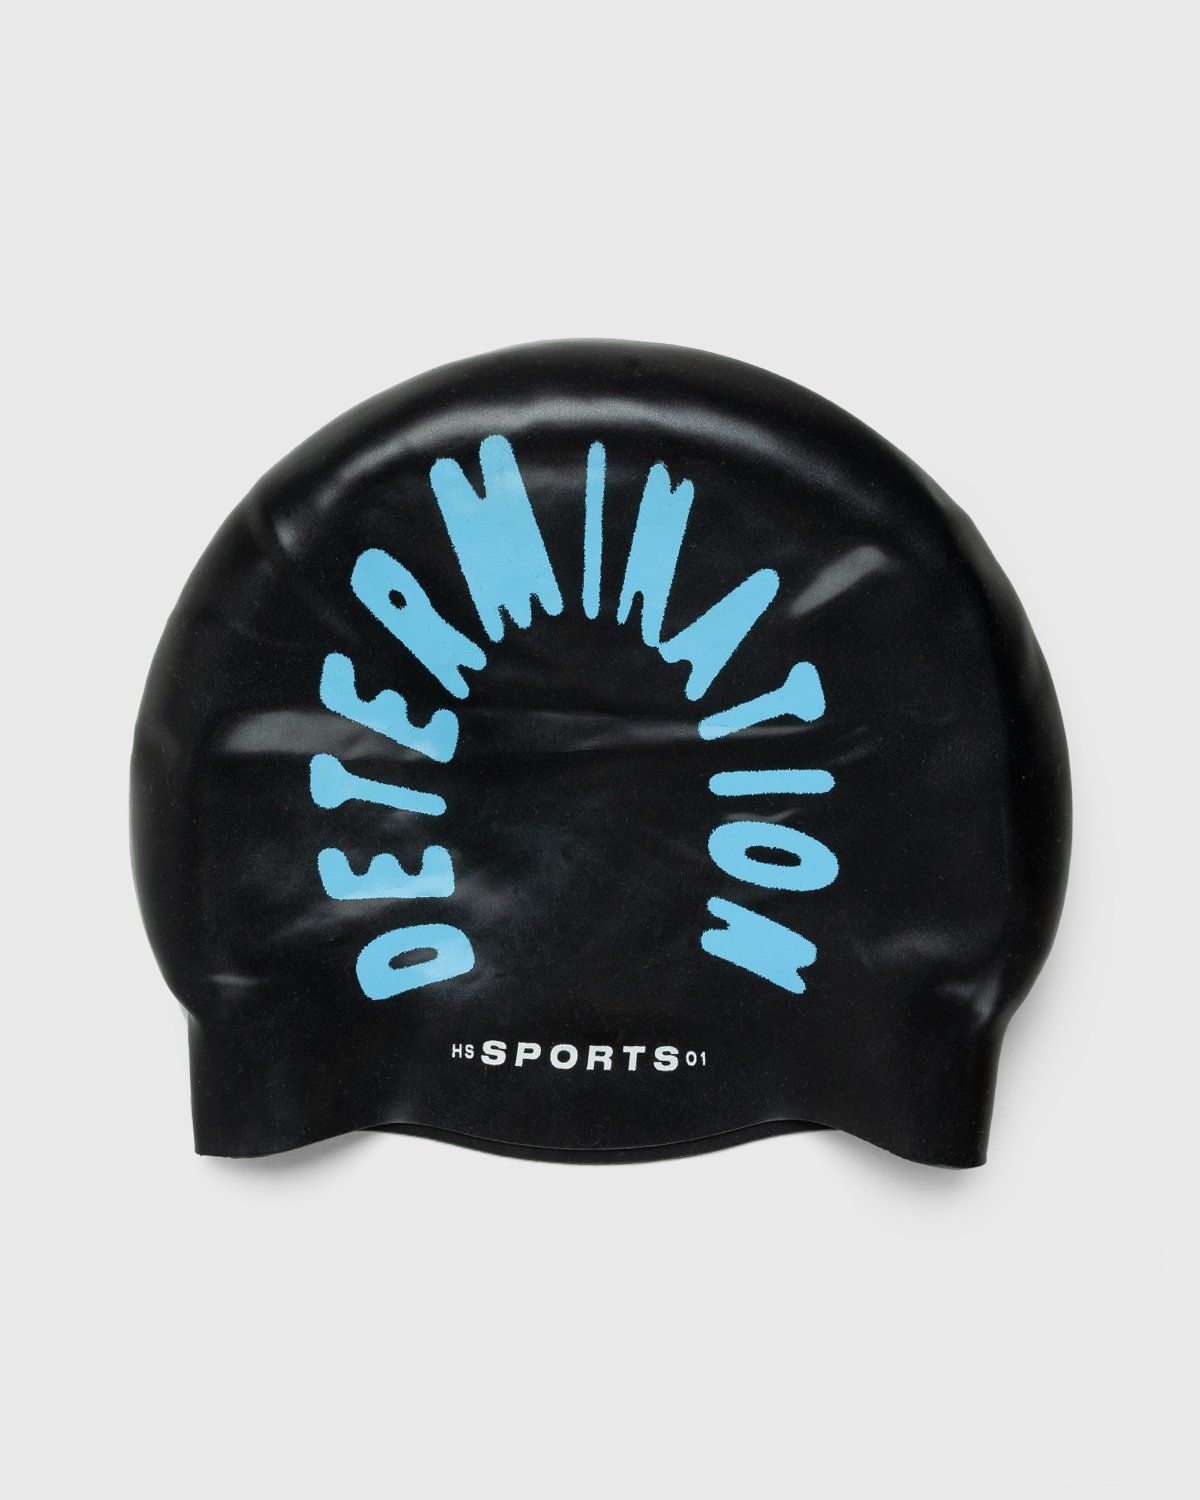 Speedo x Highsnobiety – HS Sports Determination Silicone Swim Cap Black - Swimwear - Black - Image 2